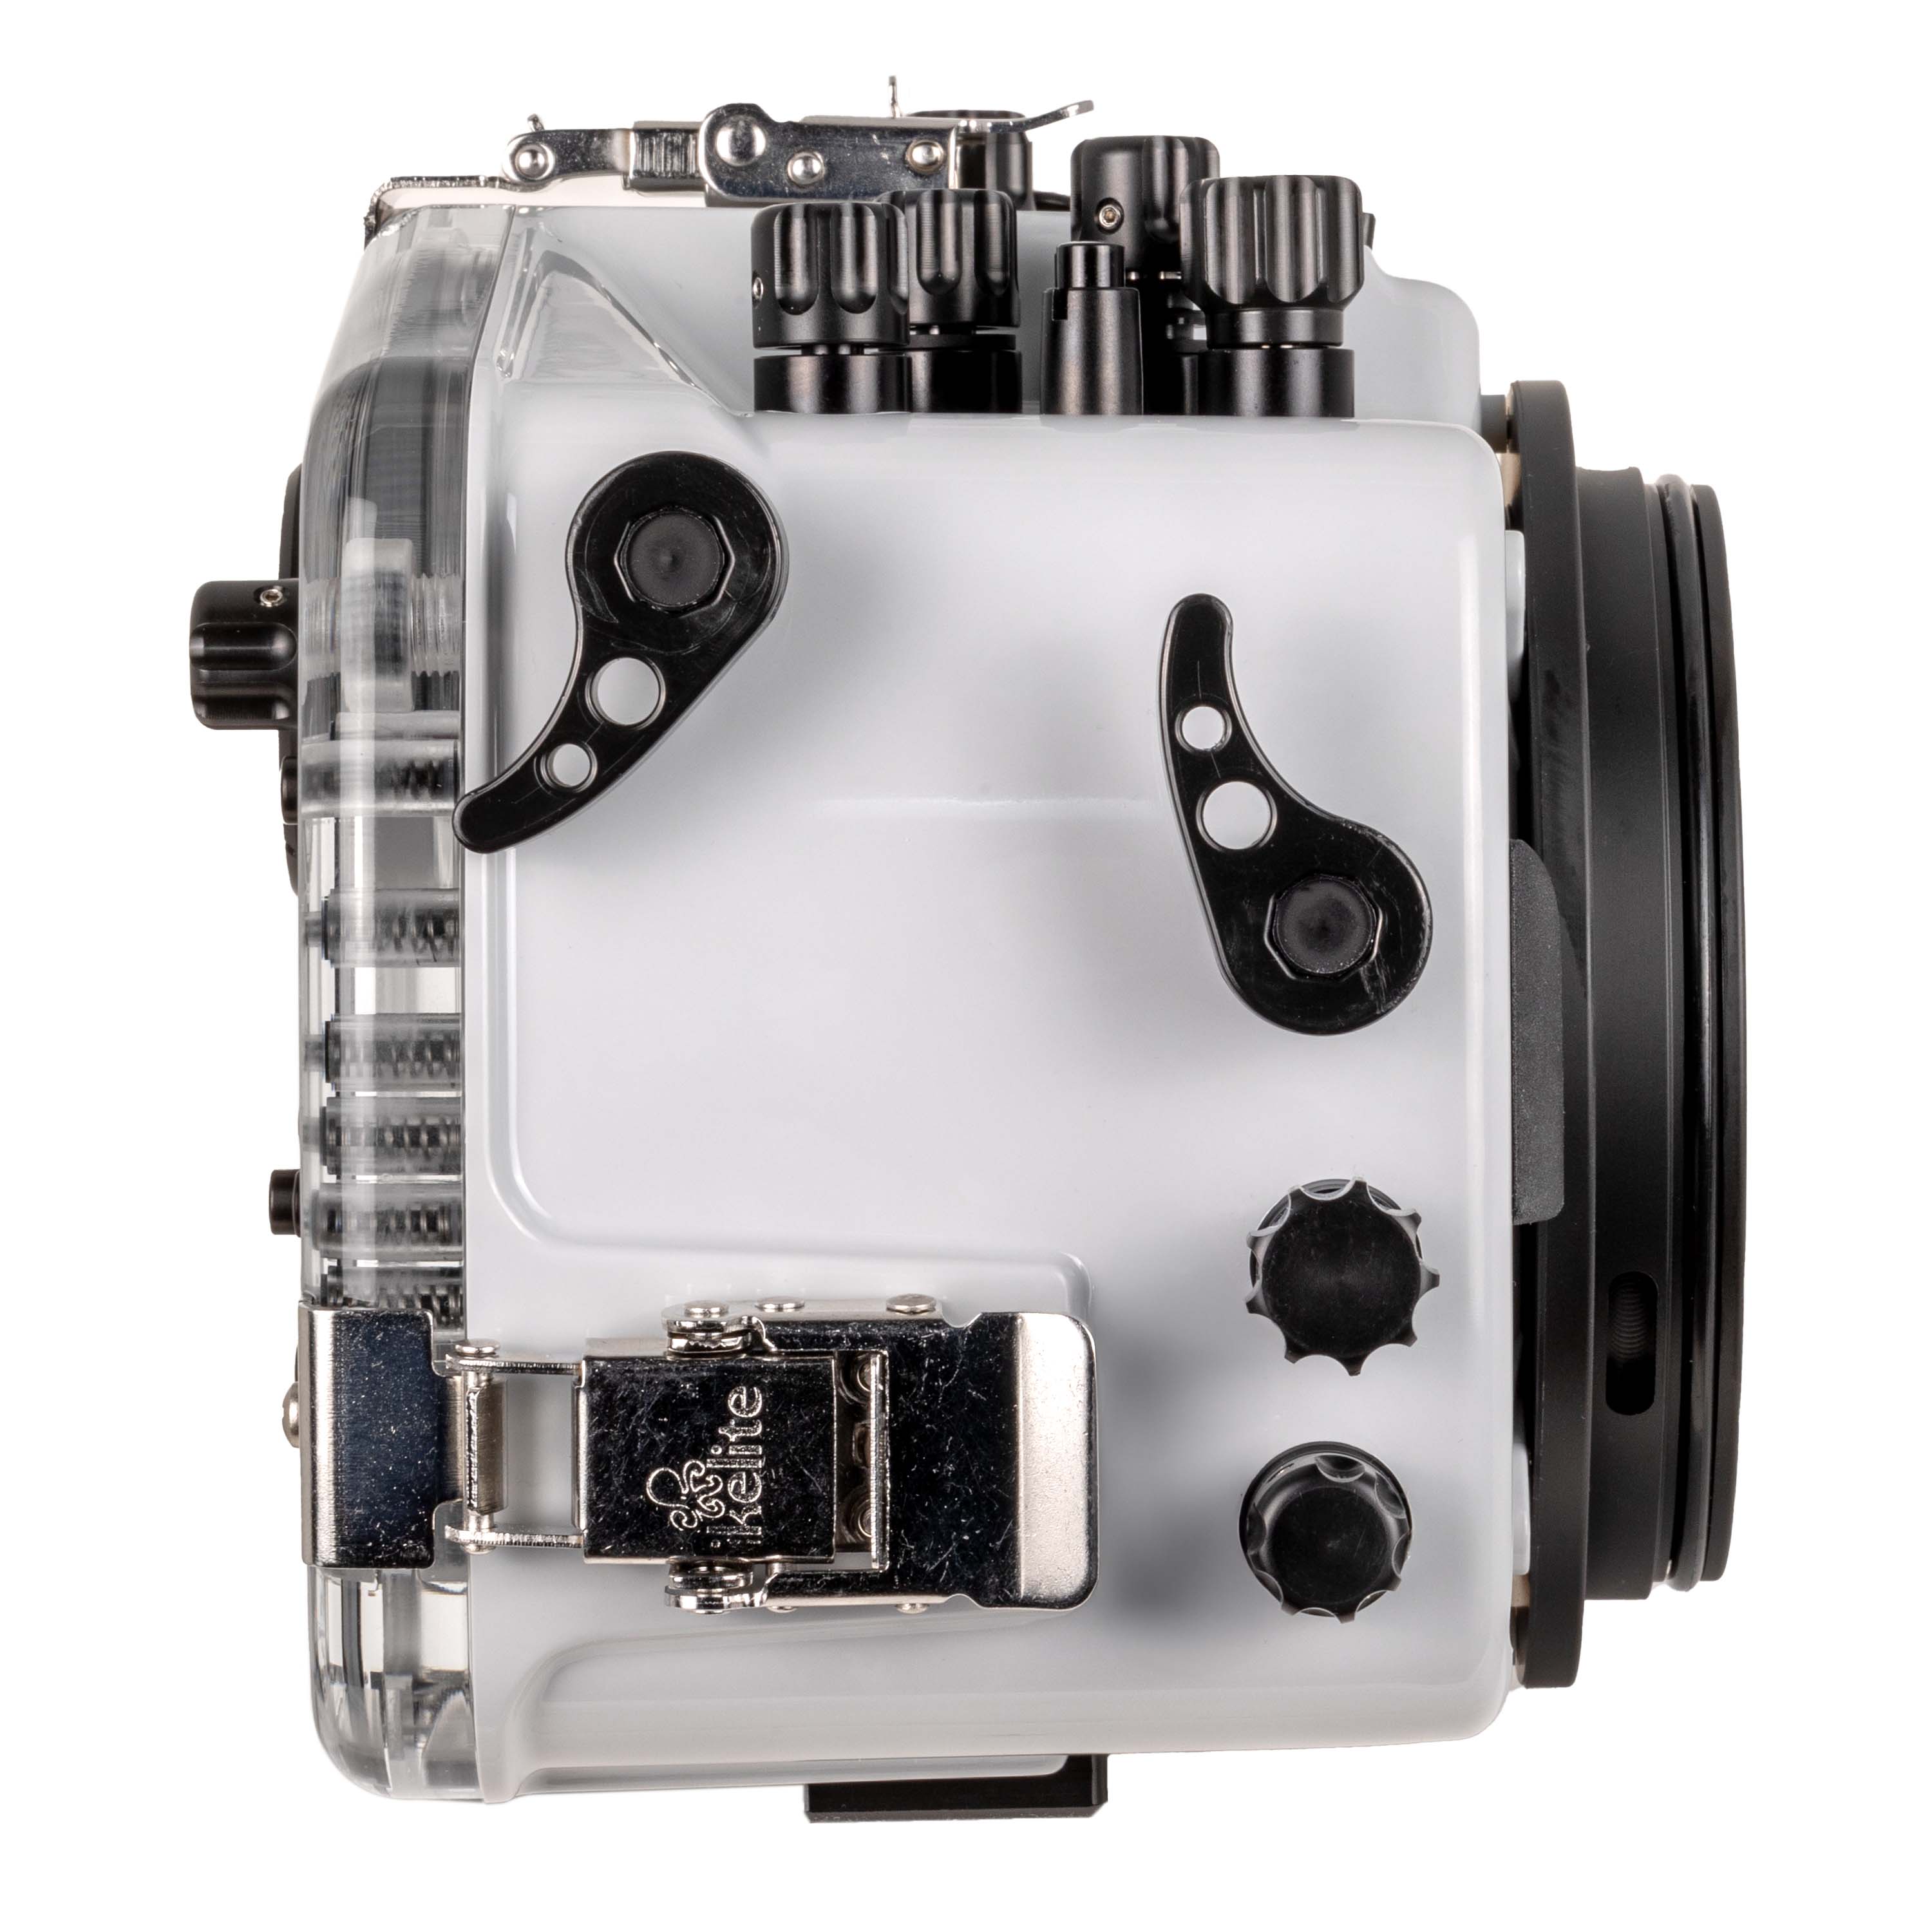 Ikelite 200DL Underwater Housing for Sony a9 III Mirrorless Digital Cameras